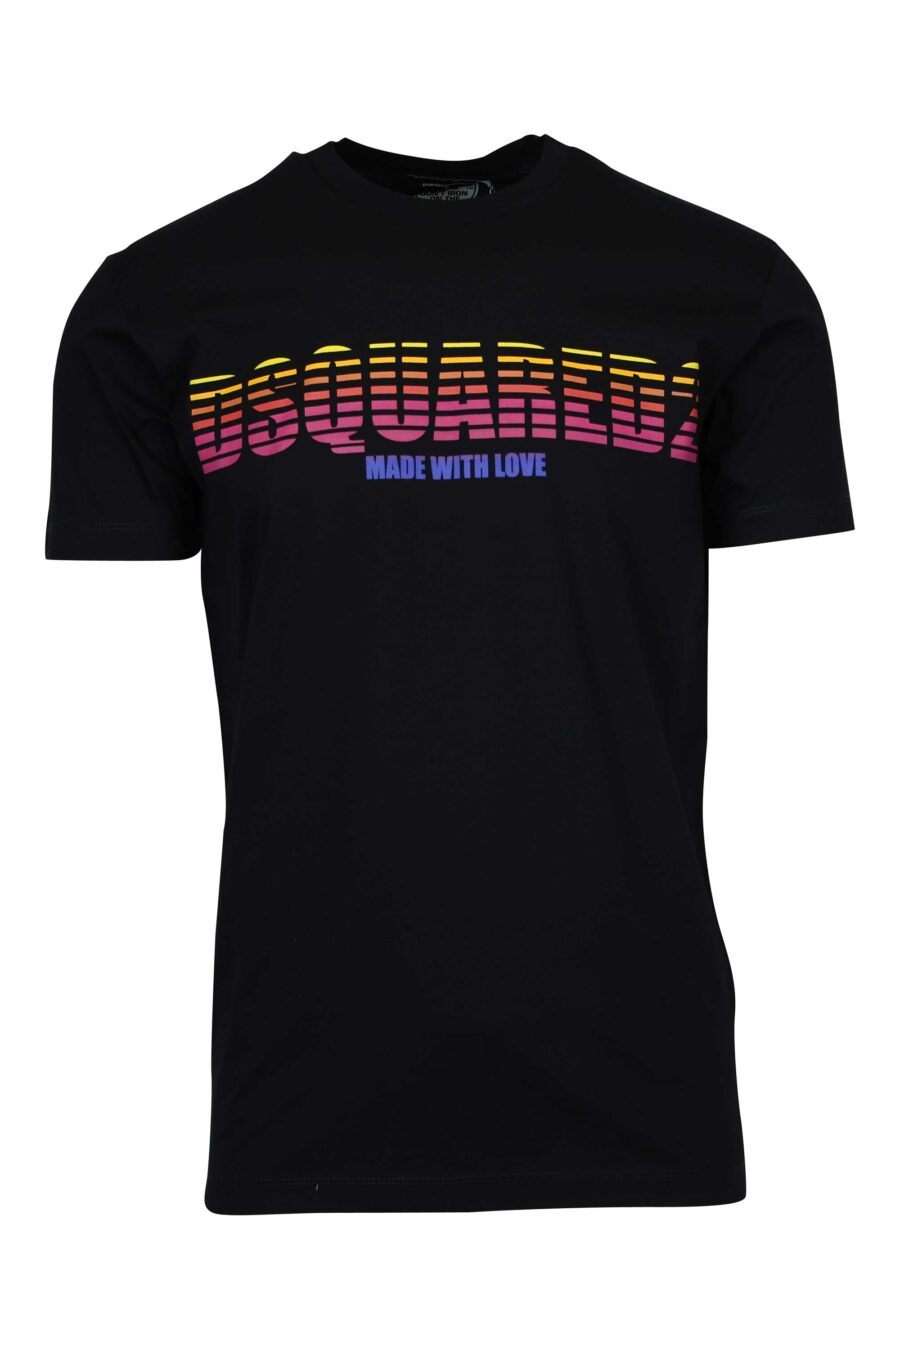 T-shirt preta com maxilogo retro multicolorido - 8054148447502